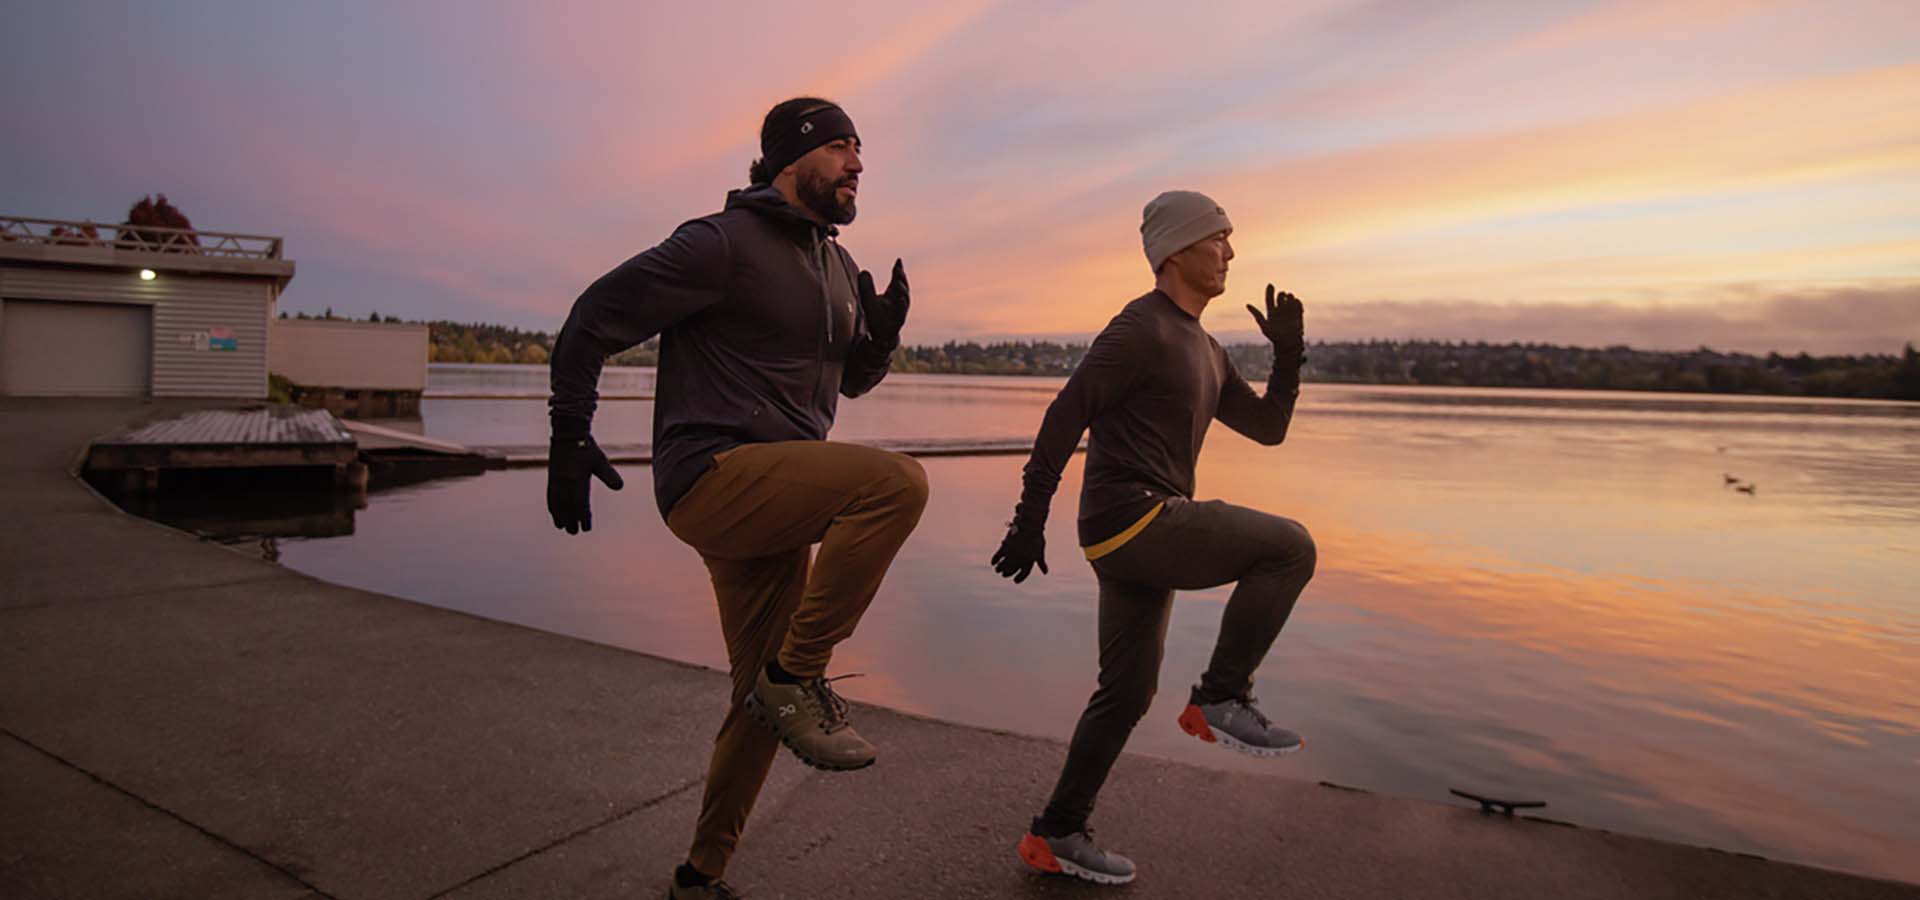 Two men jogging near a lake at sunset.